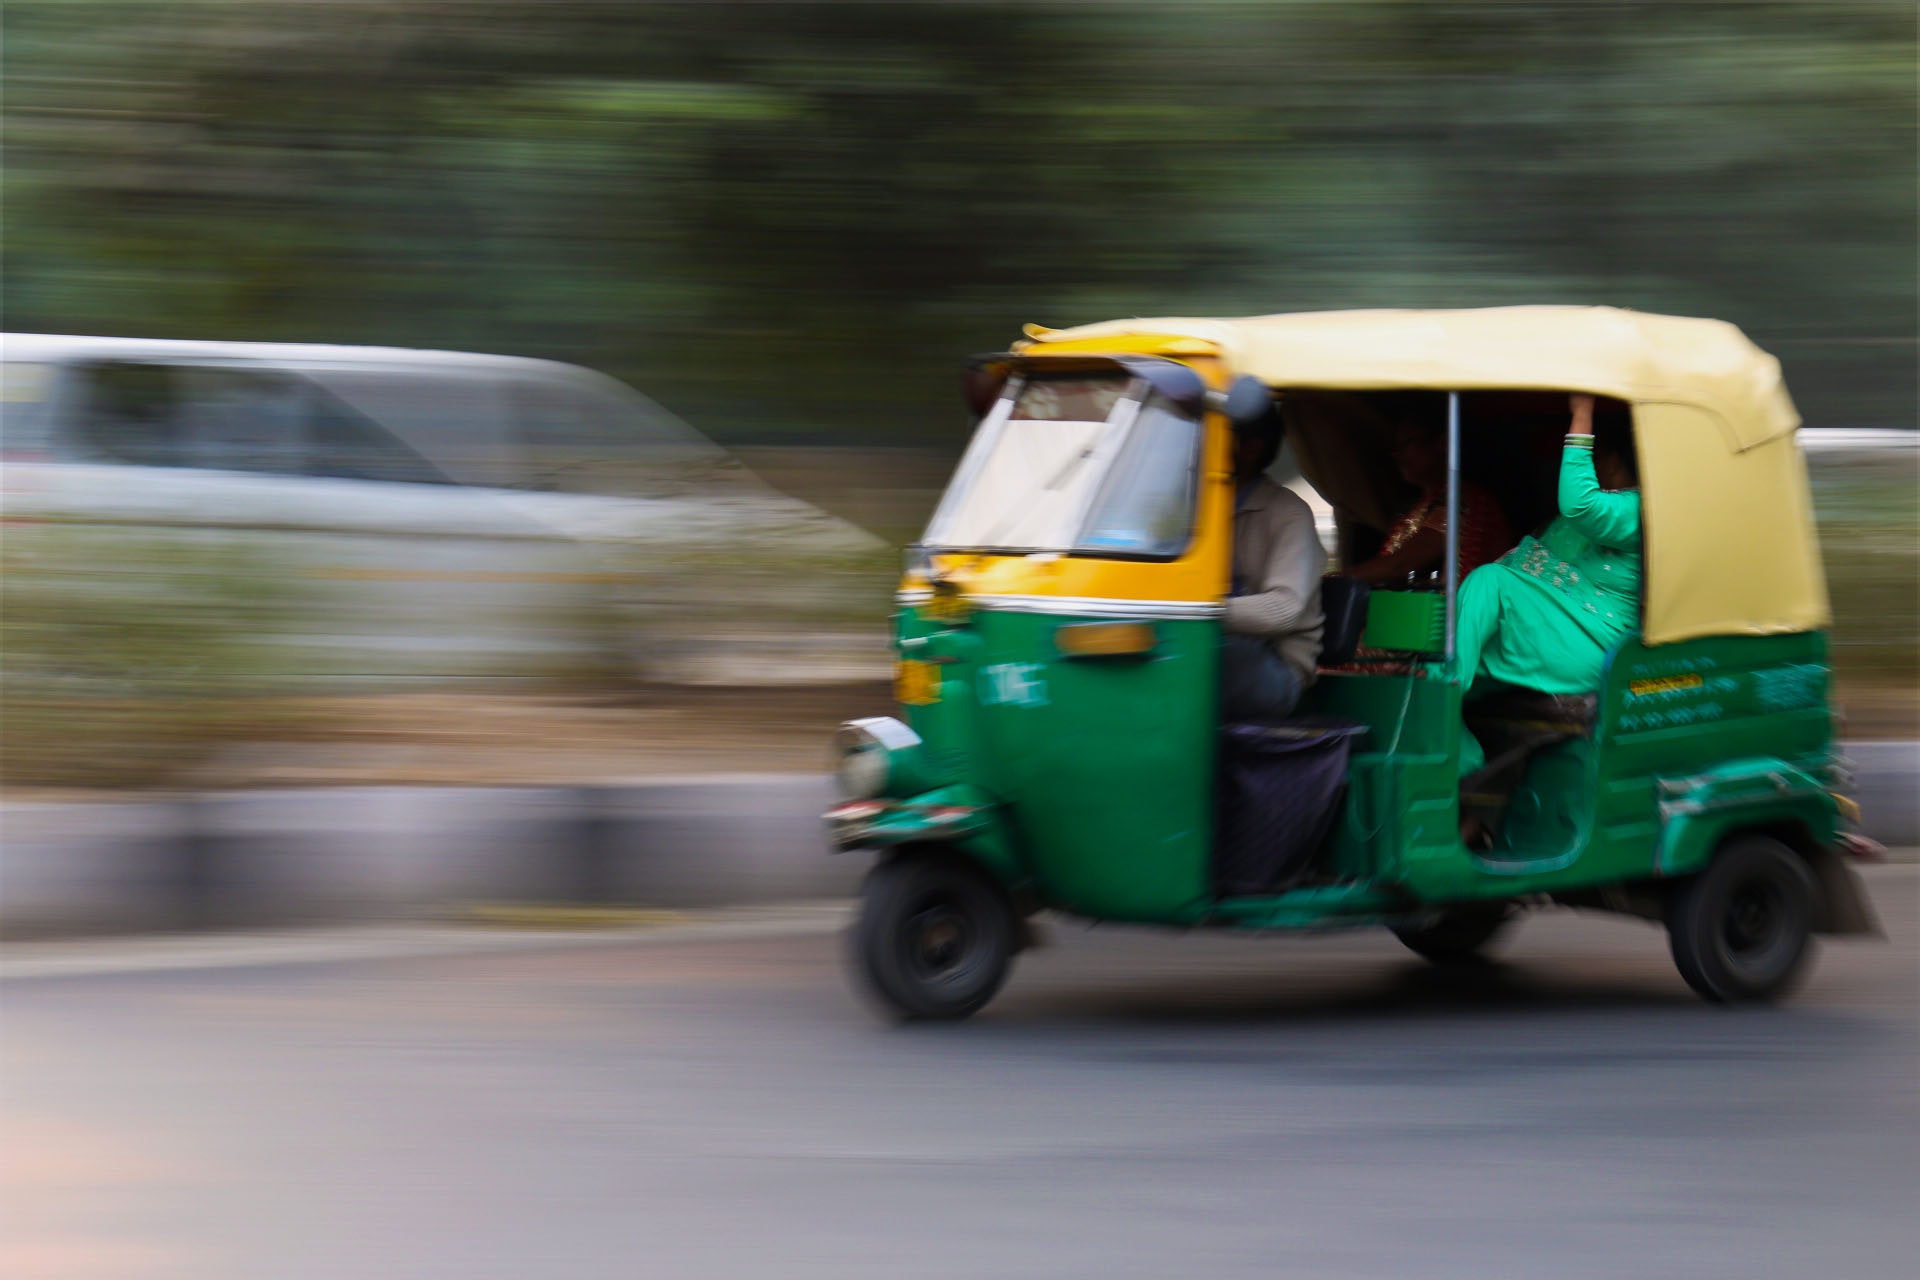 Green and Yellow 3 Wheeled Vehicle, Auto, Rickshaw, Street, Taxi, HQ Photo